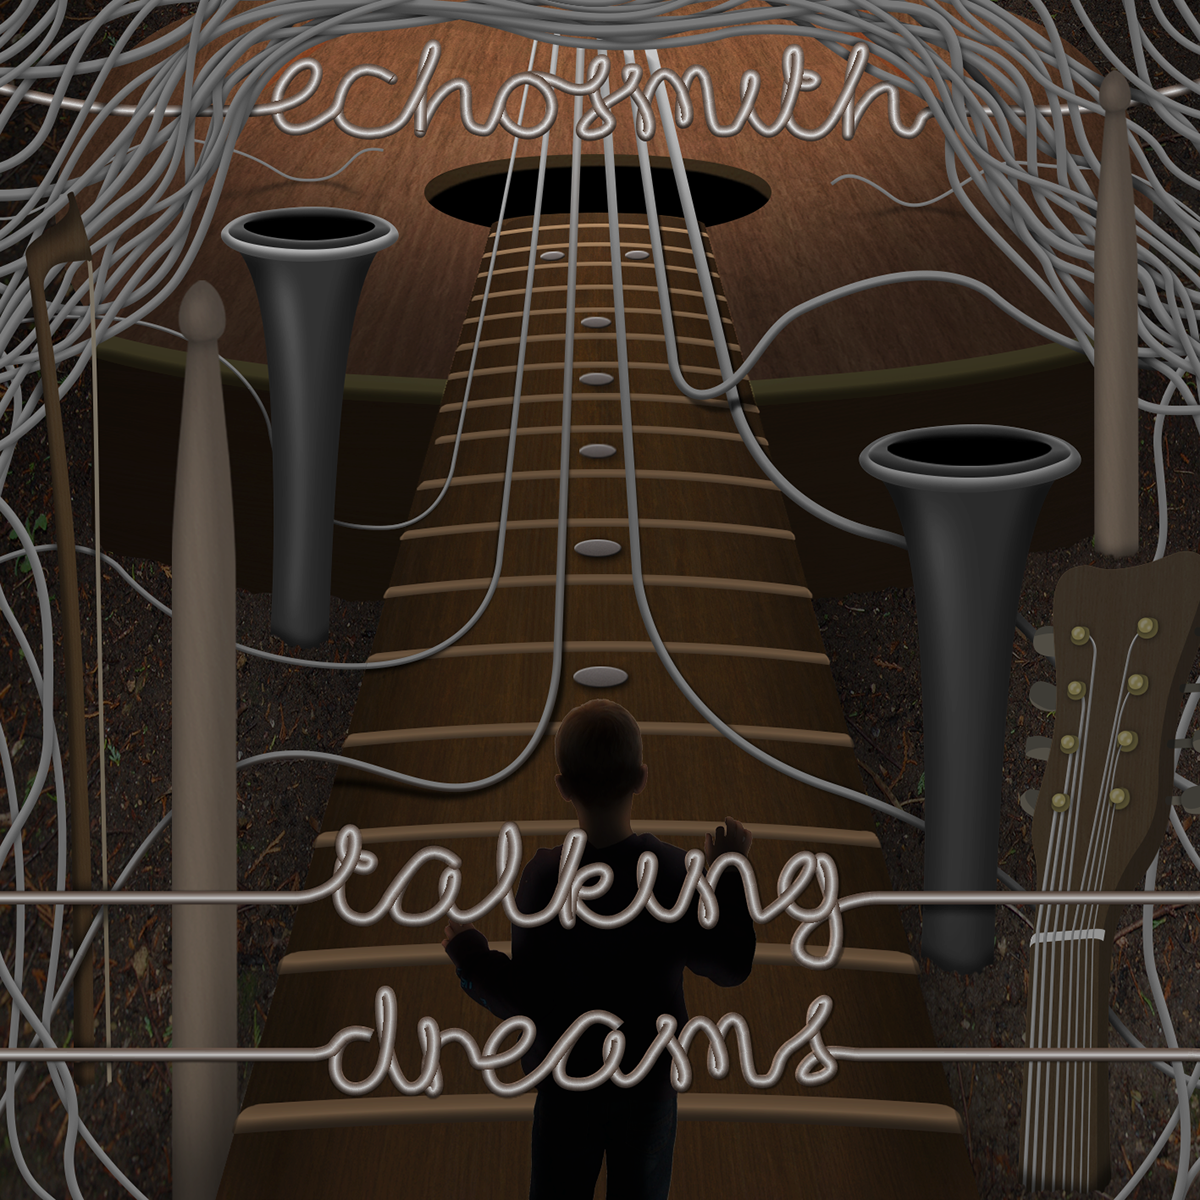 Adobe Portfolio graphics coursework final design gcse echosmith talking dreams Album cover